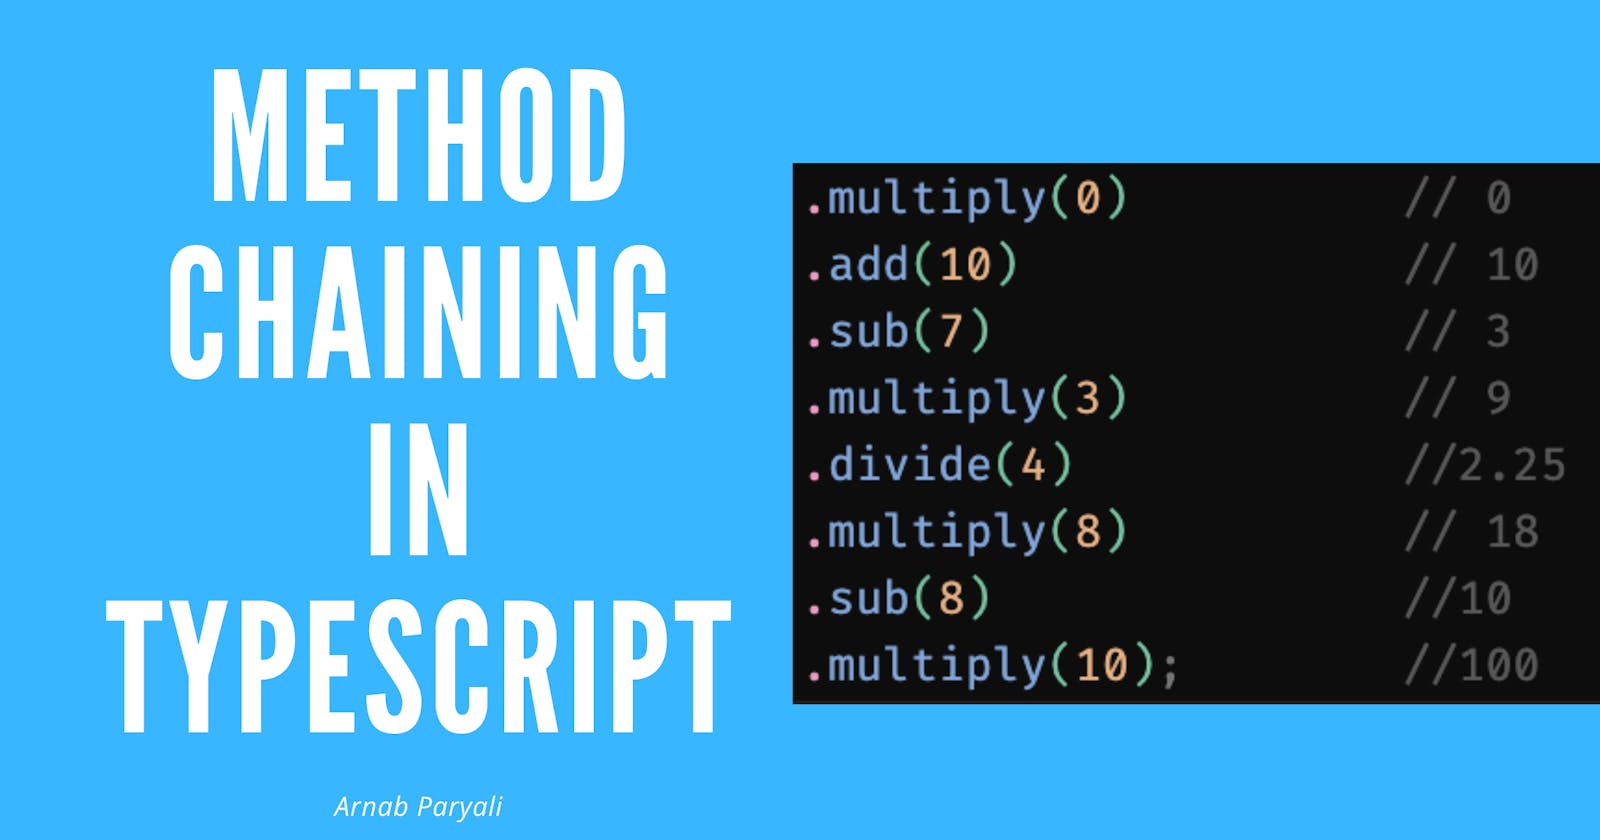 Method chaining in TypeScript